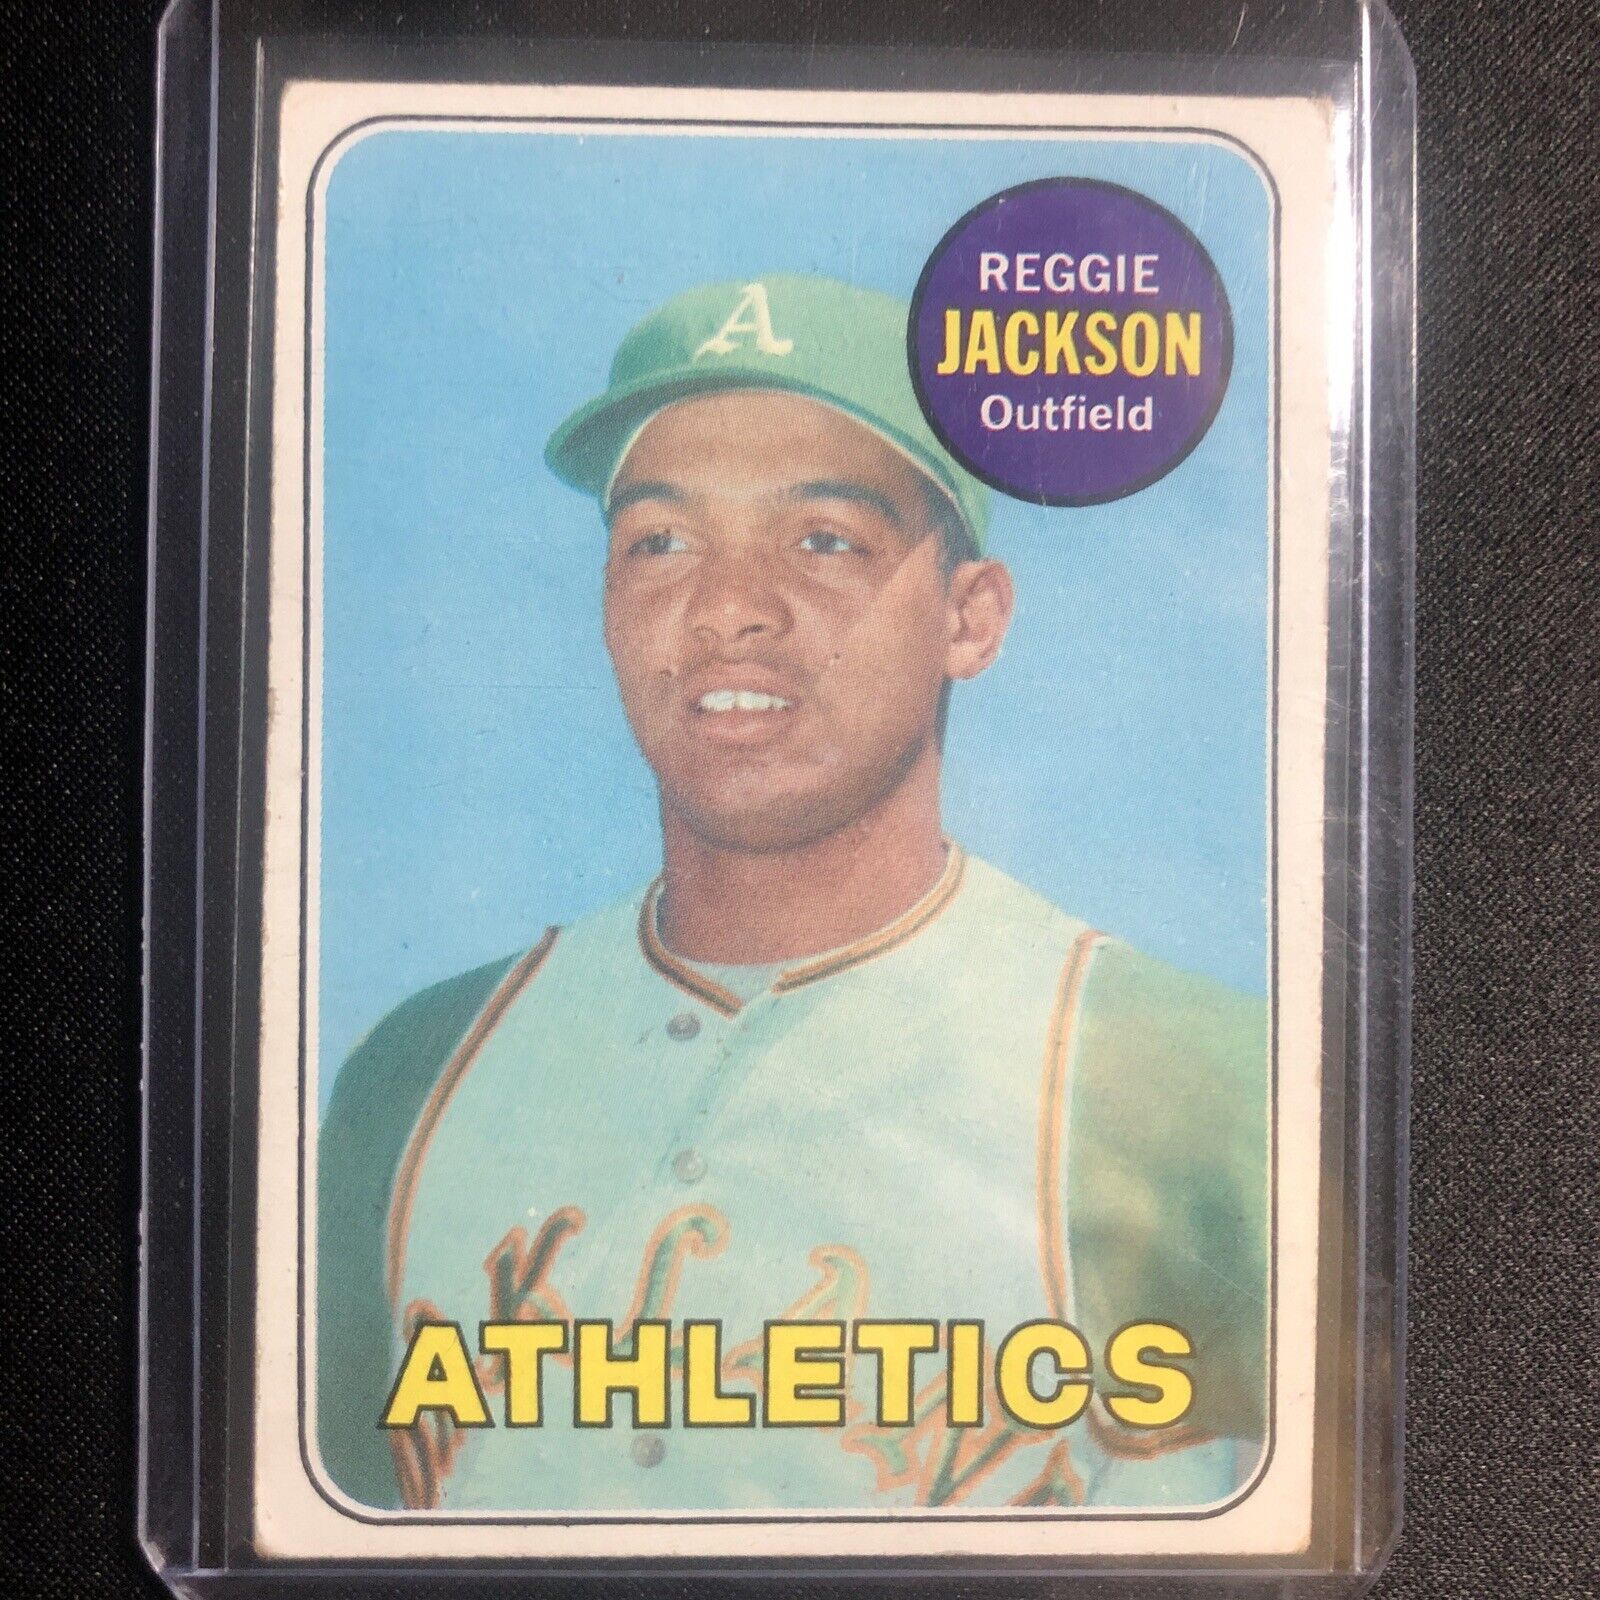 1969 Topps Reggie Jackson rookie card